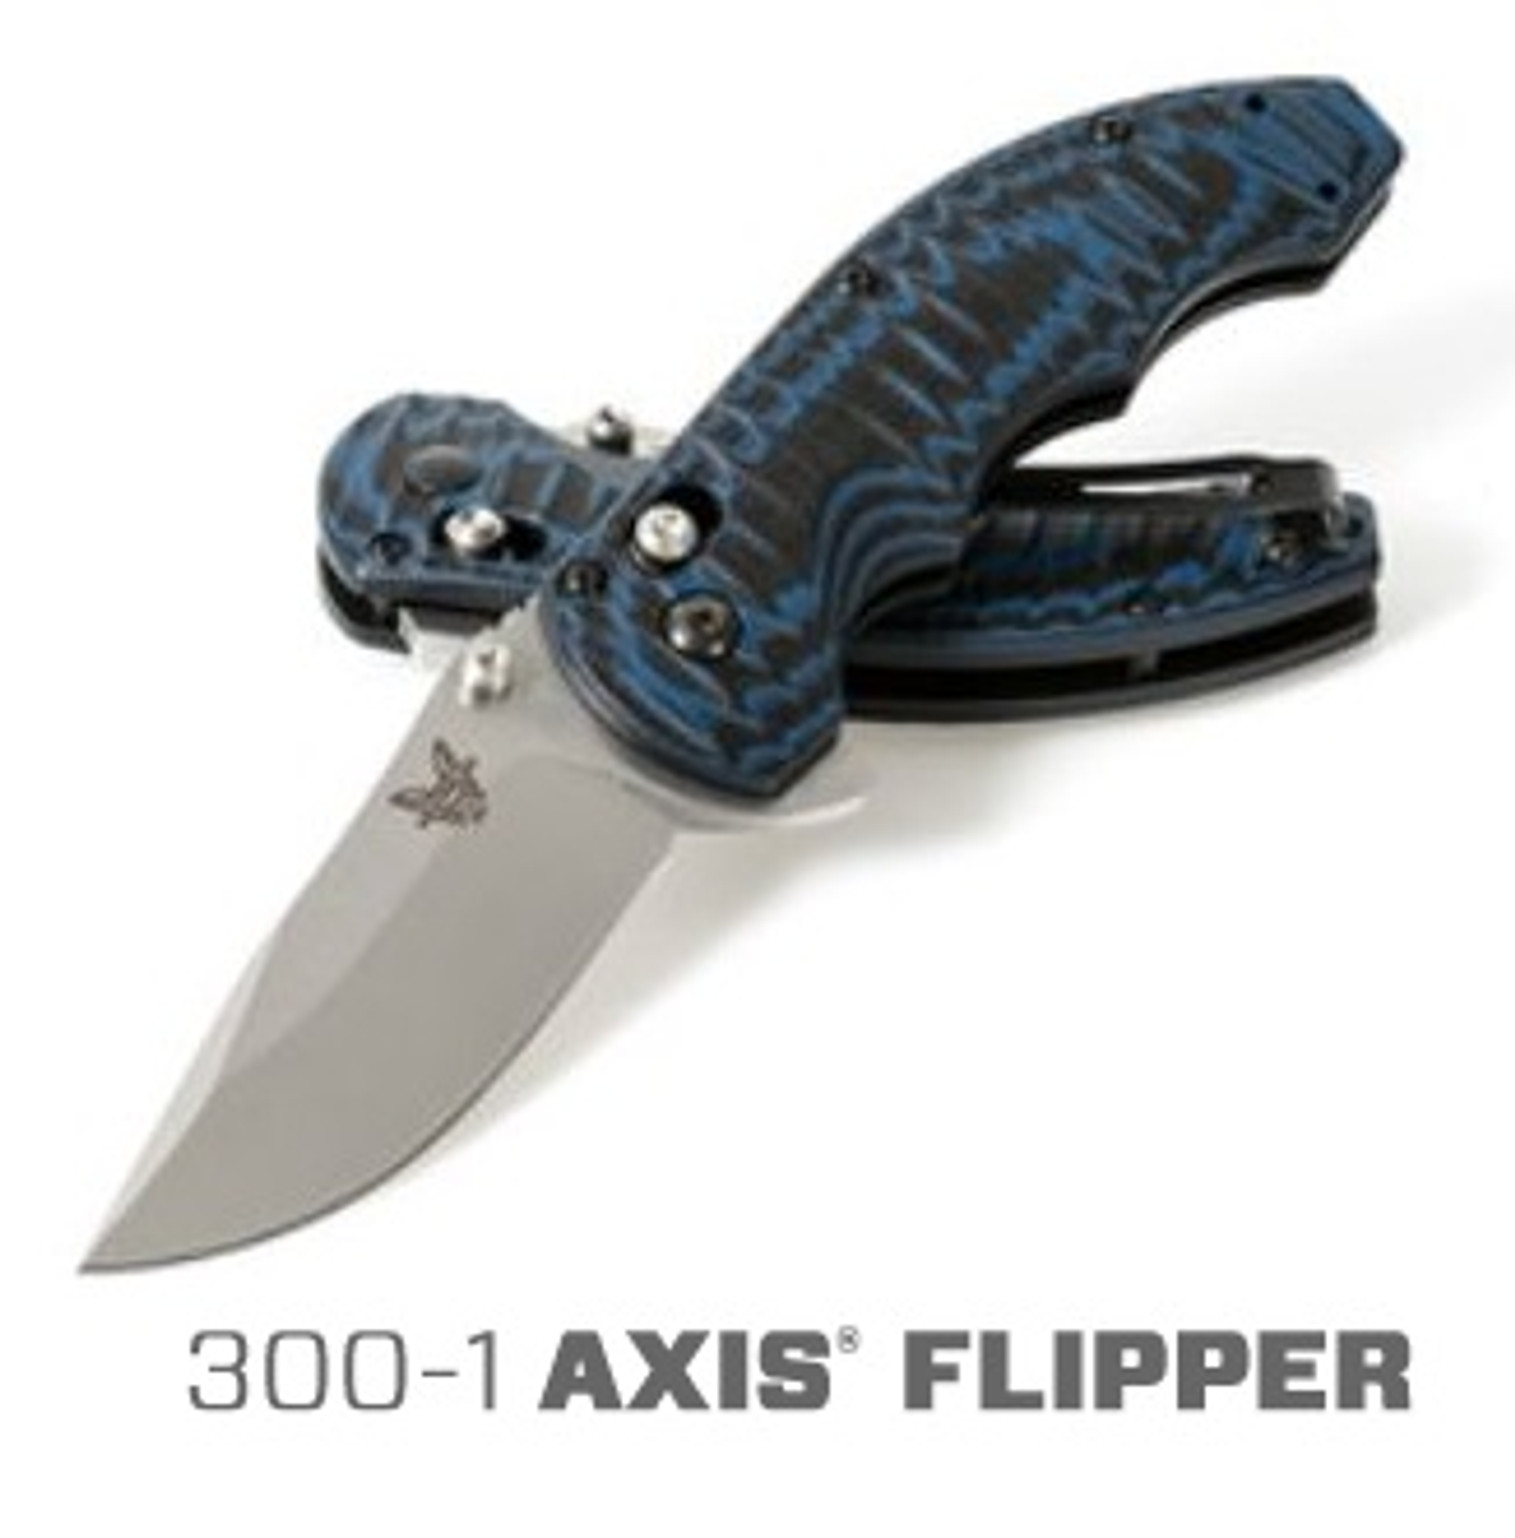 Benchmade Axis Flipper 300-1